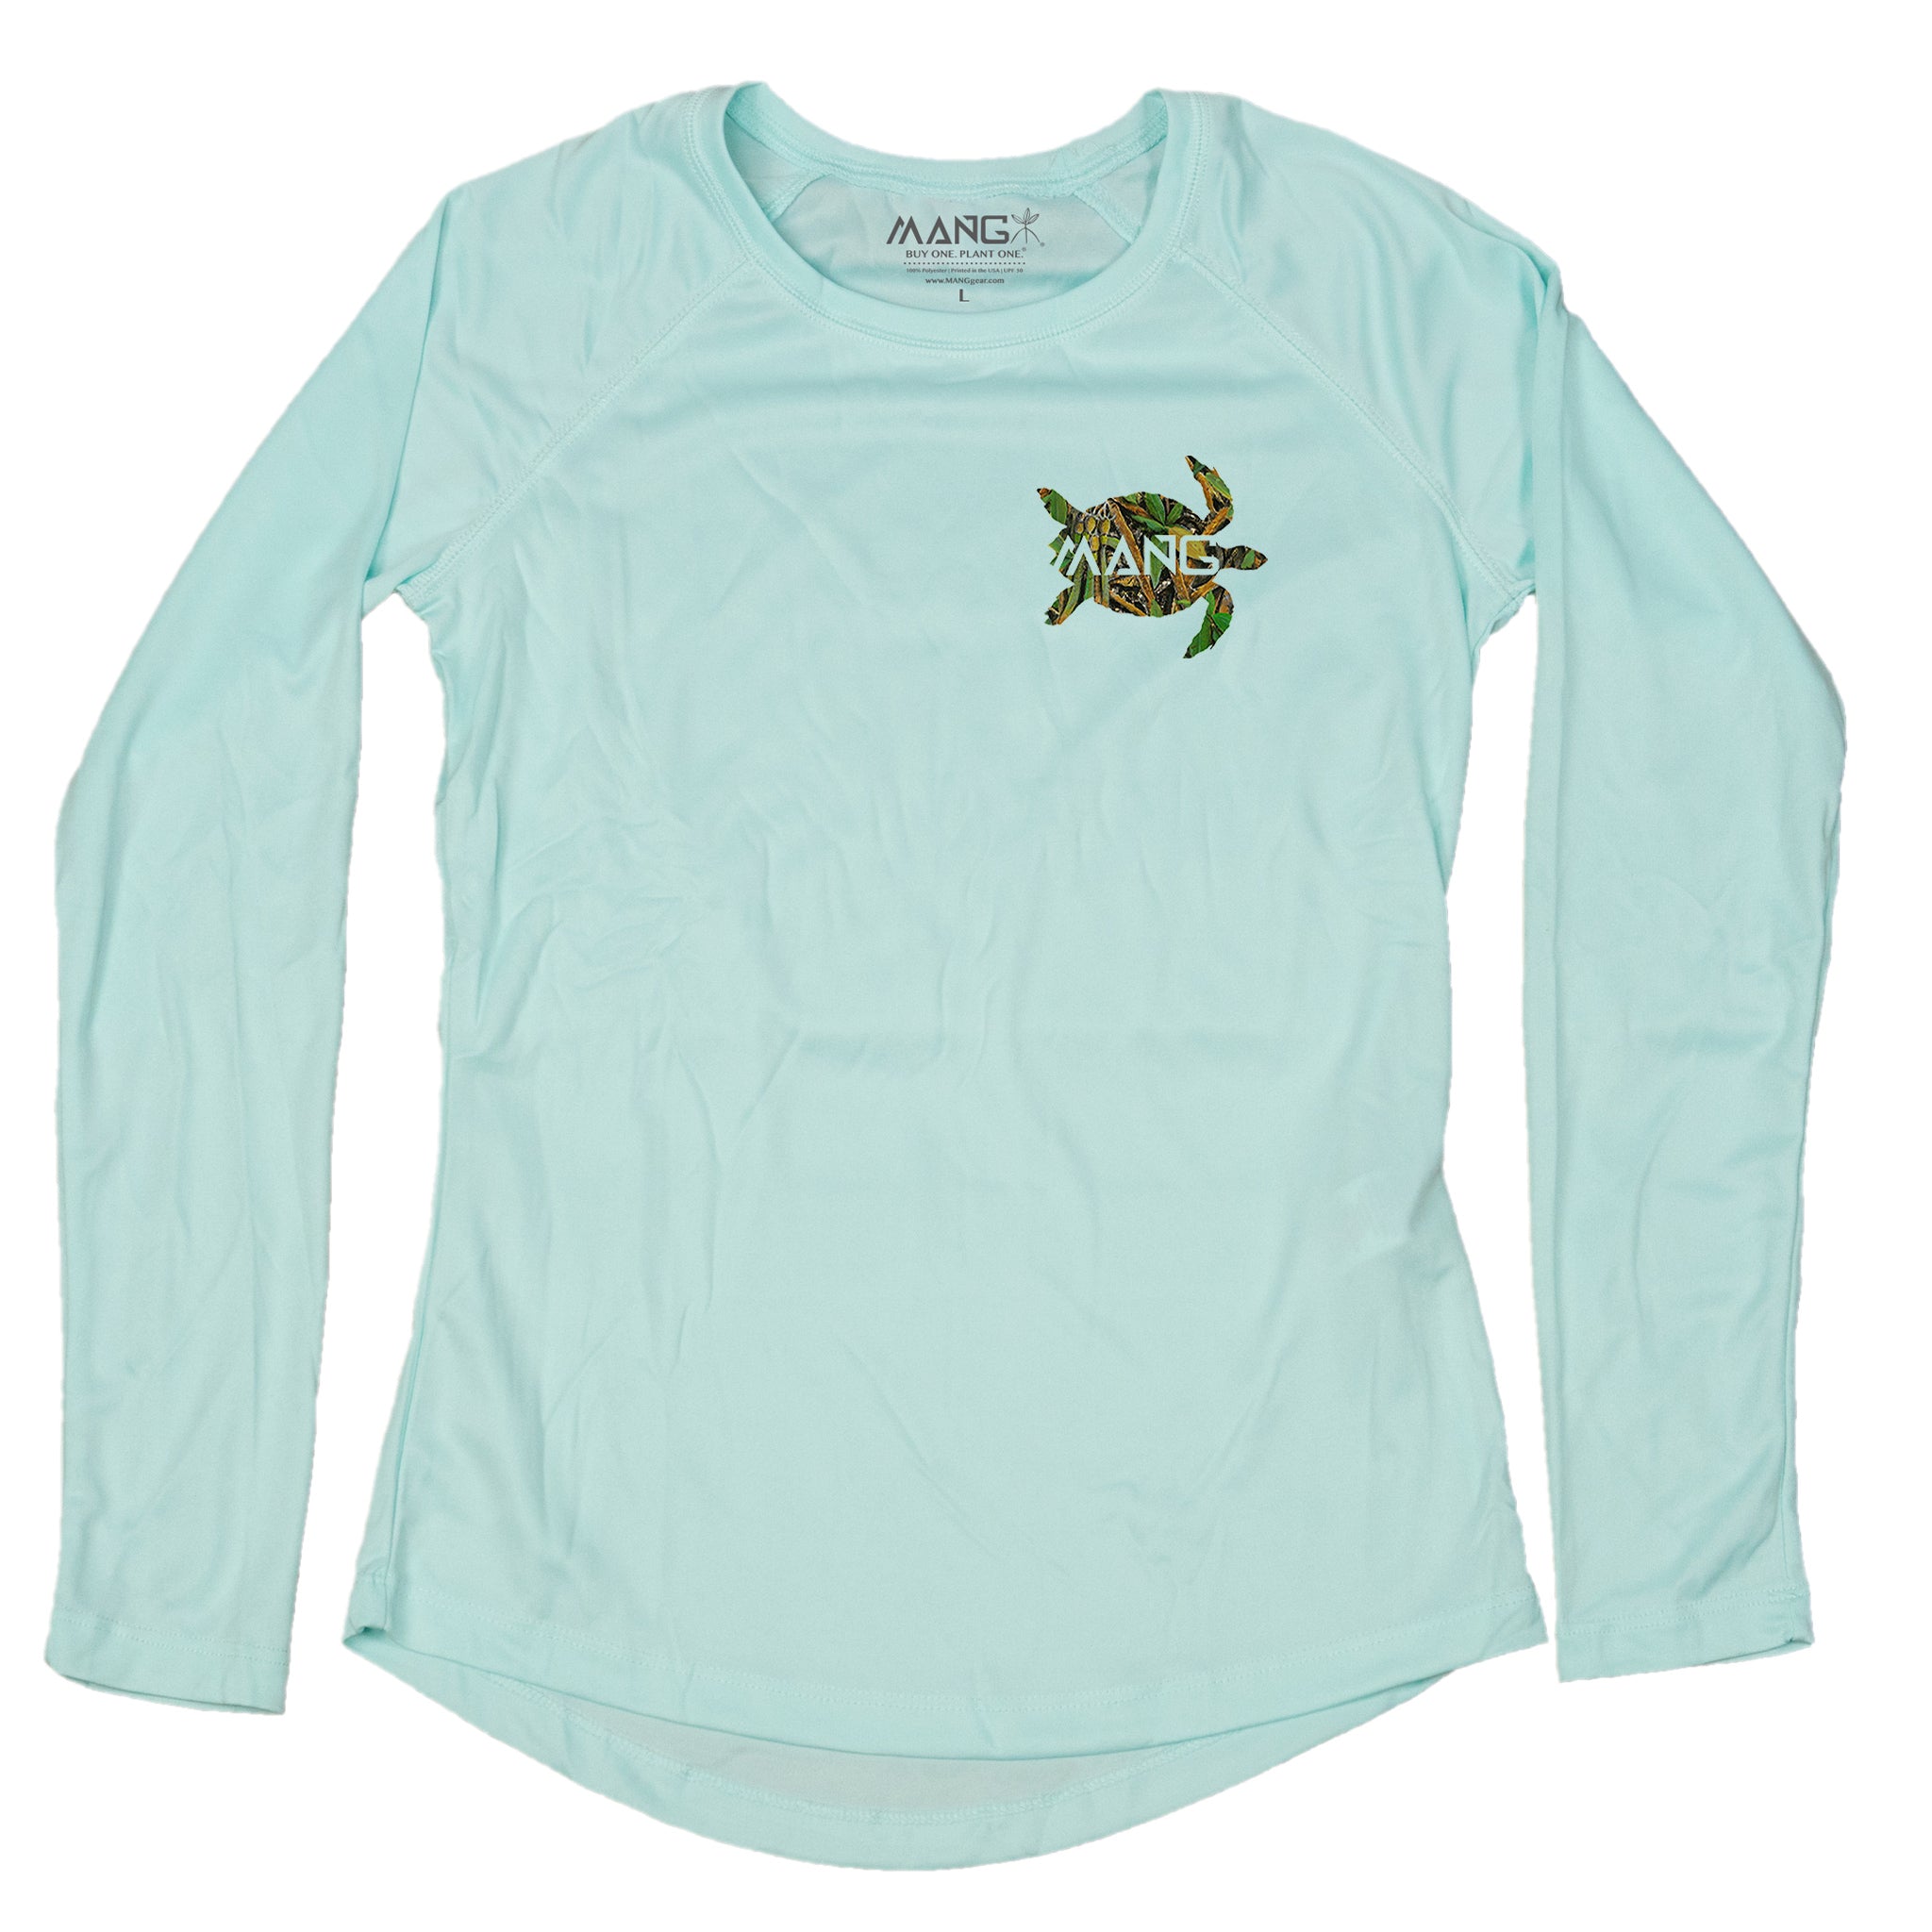 Women's Grassy Turtle Performance Longsleeve Shirt